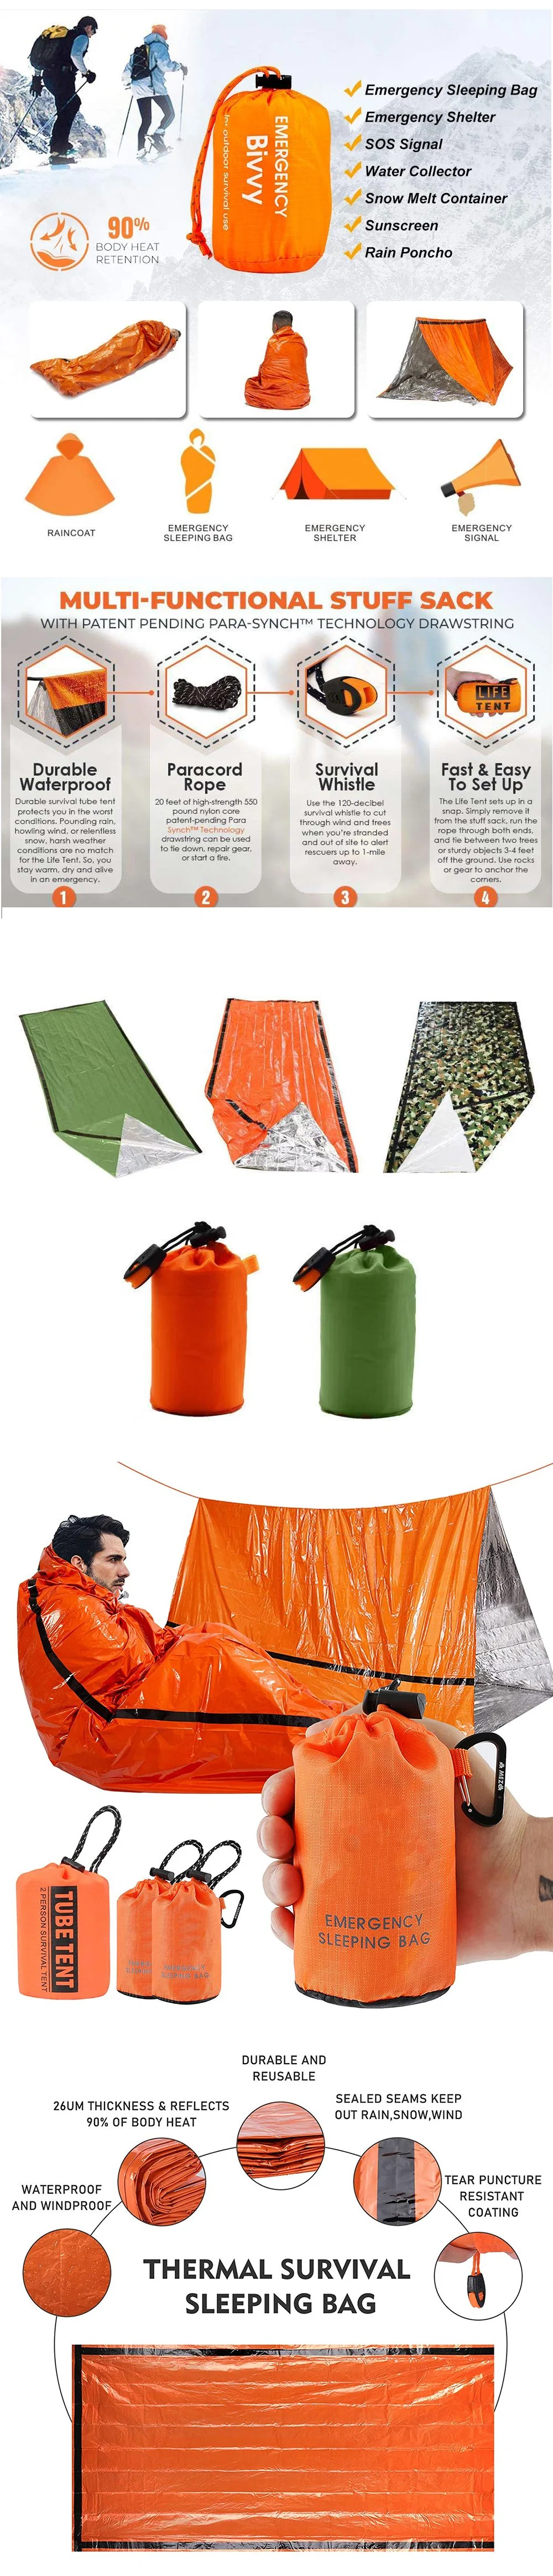 Emergency Bivy Sack Tactical Gear Life Saving Survival Sleeping Bag Emergency Camping Gear Mylar Thermal Bivvy